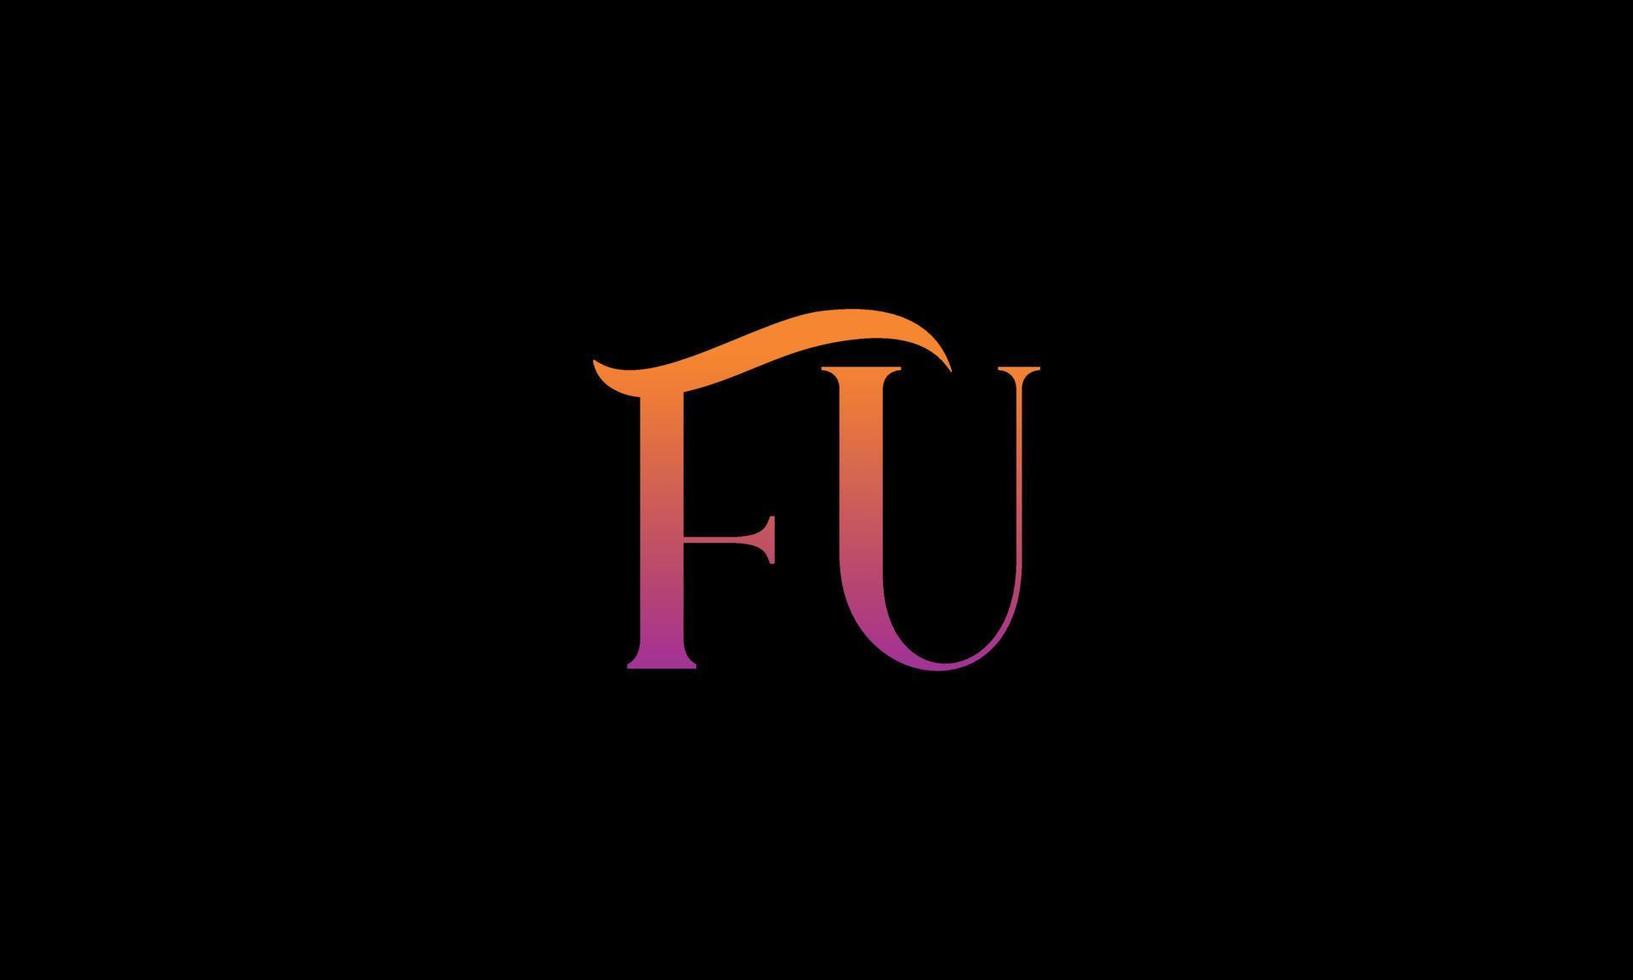 Buchstabe Fu Vektor Logo kostenlose Vorlage kostenloser Vektor